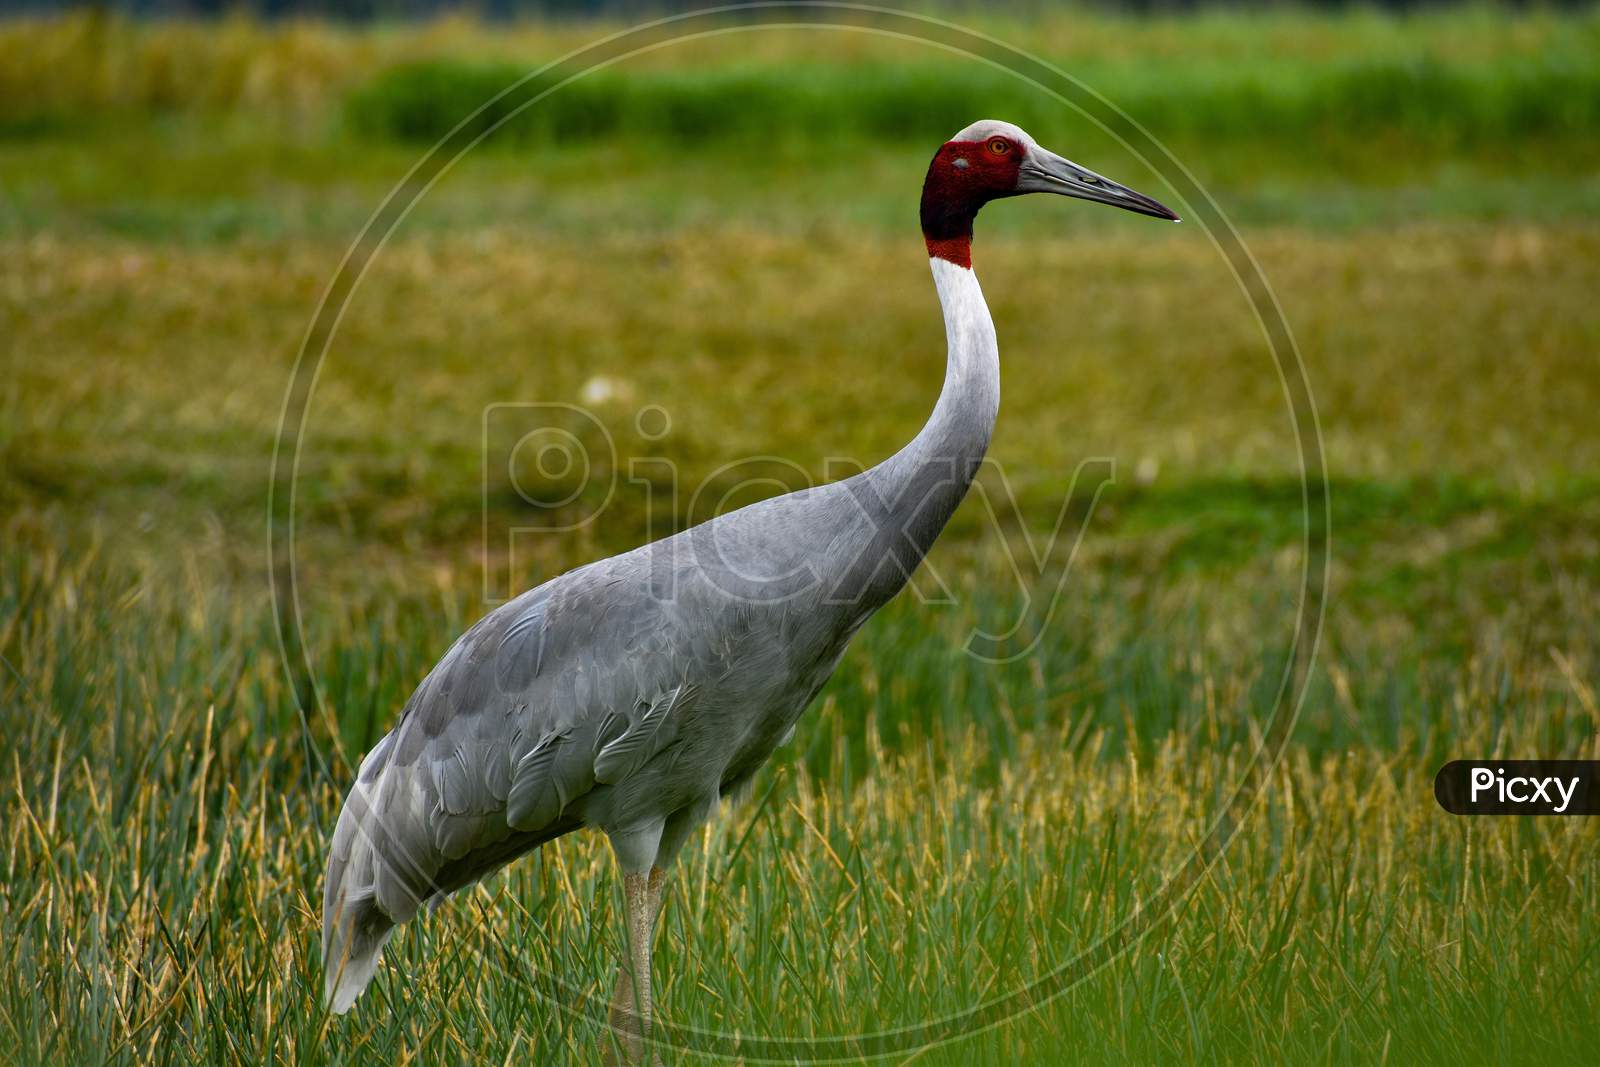 A breathtaking portrait of sarus crane